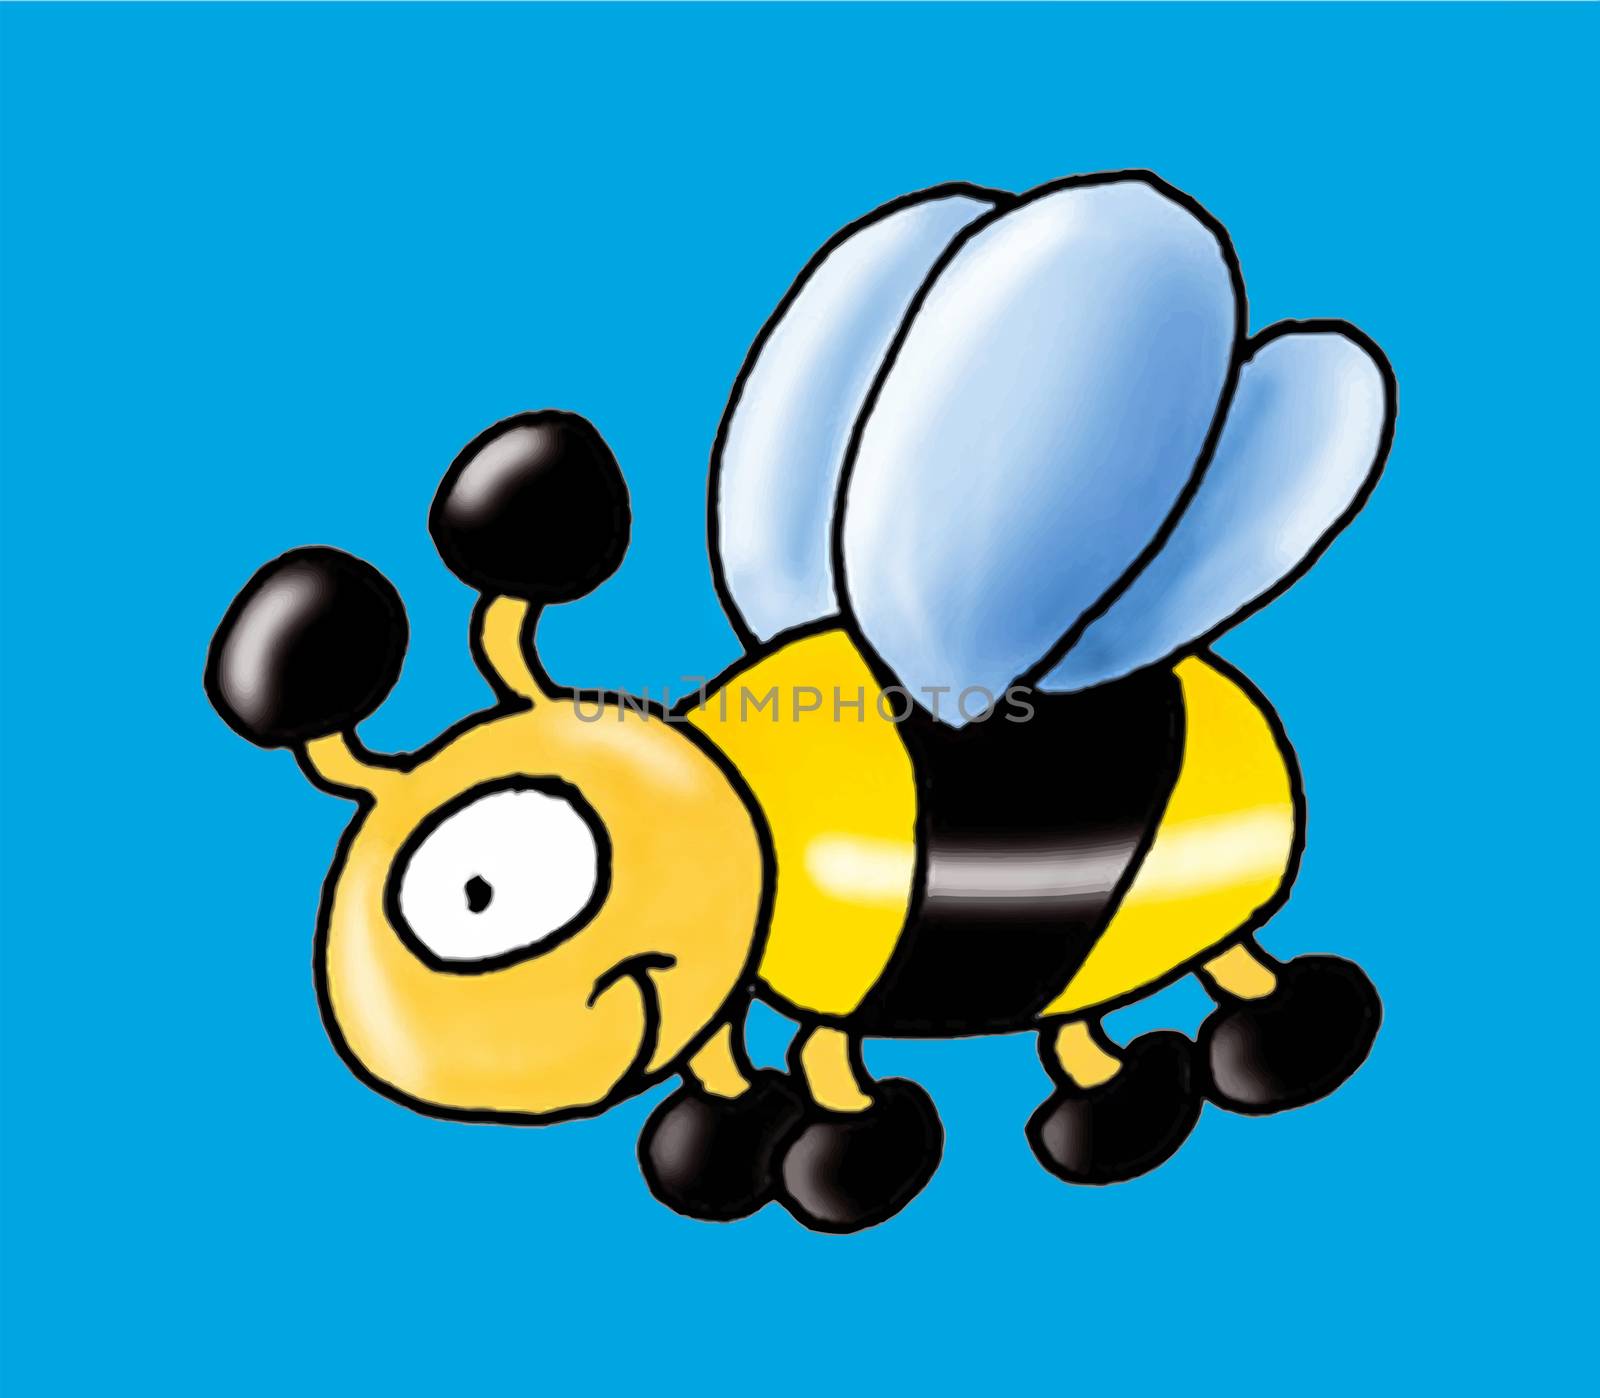 A flying bee by silviagaudenzi